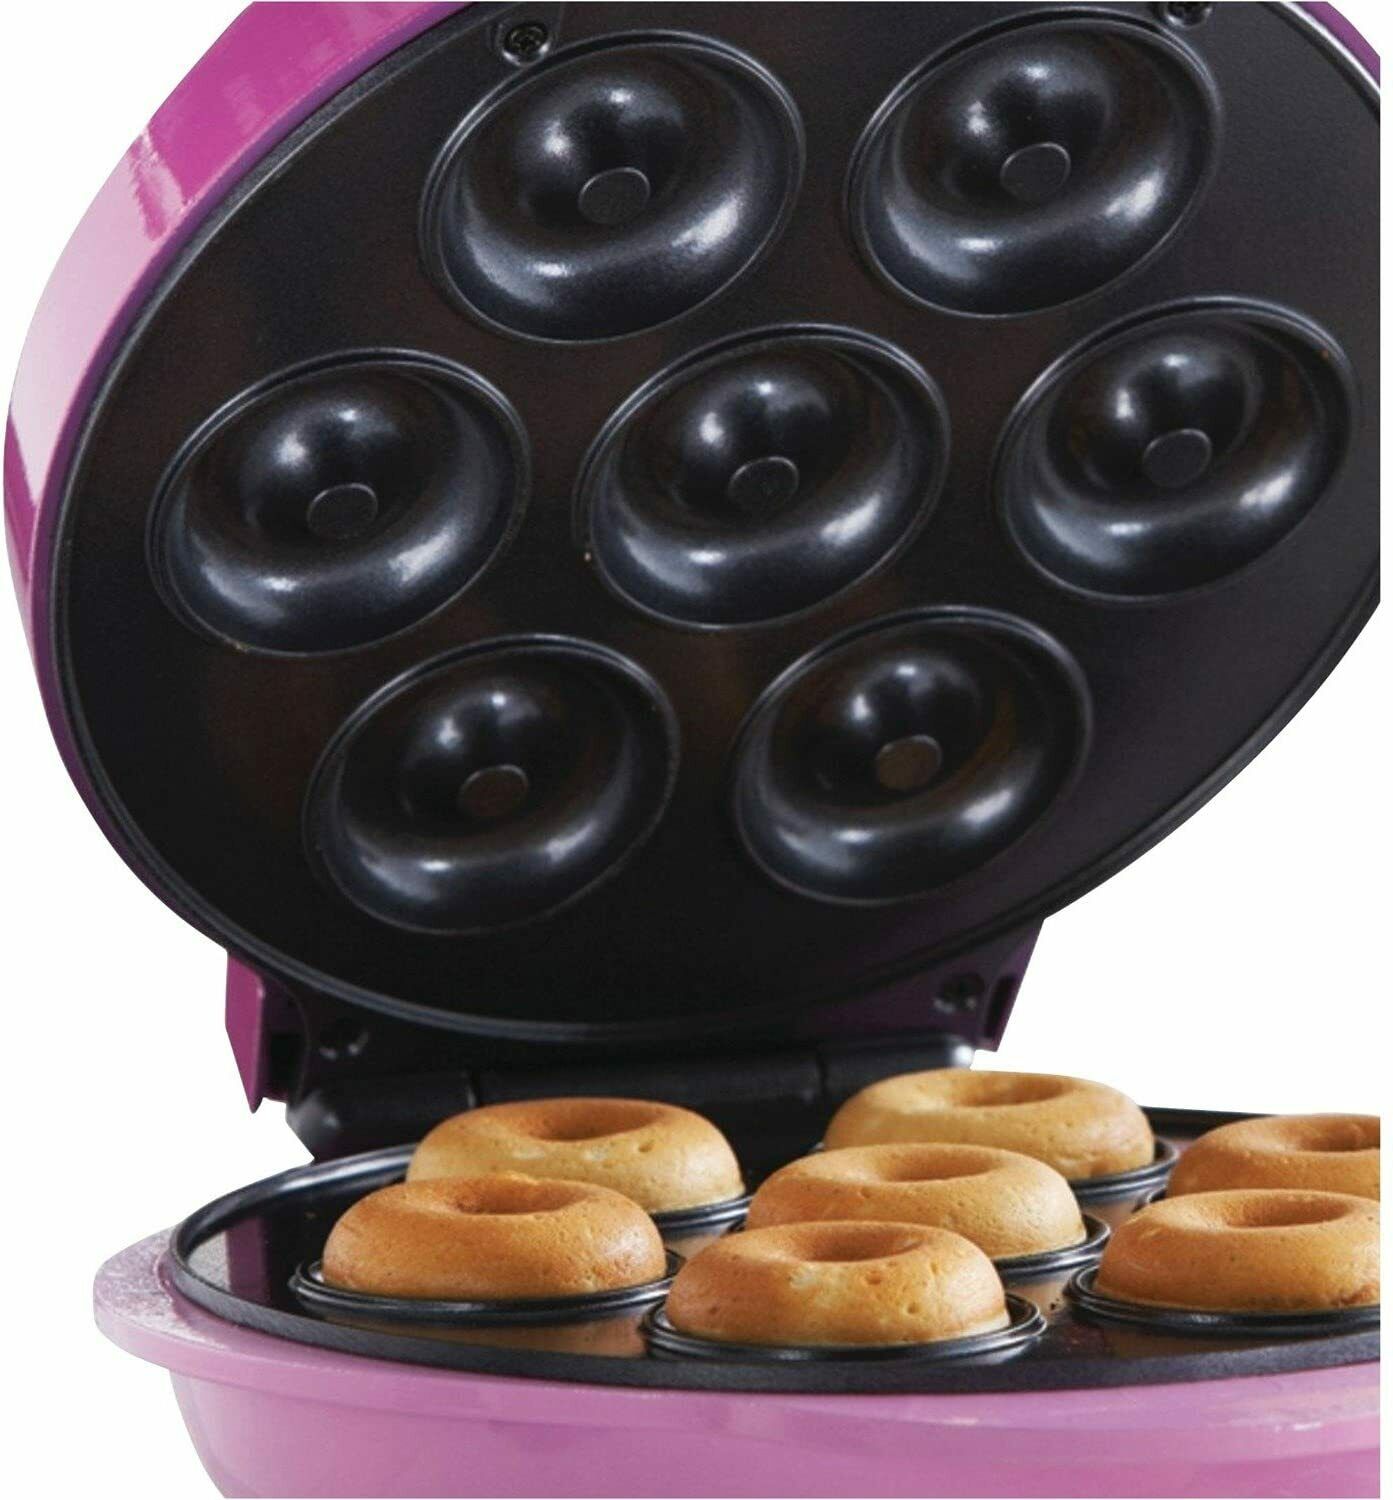 Brentwood Mini Donut Maker, Pink